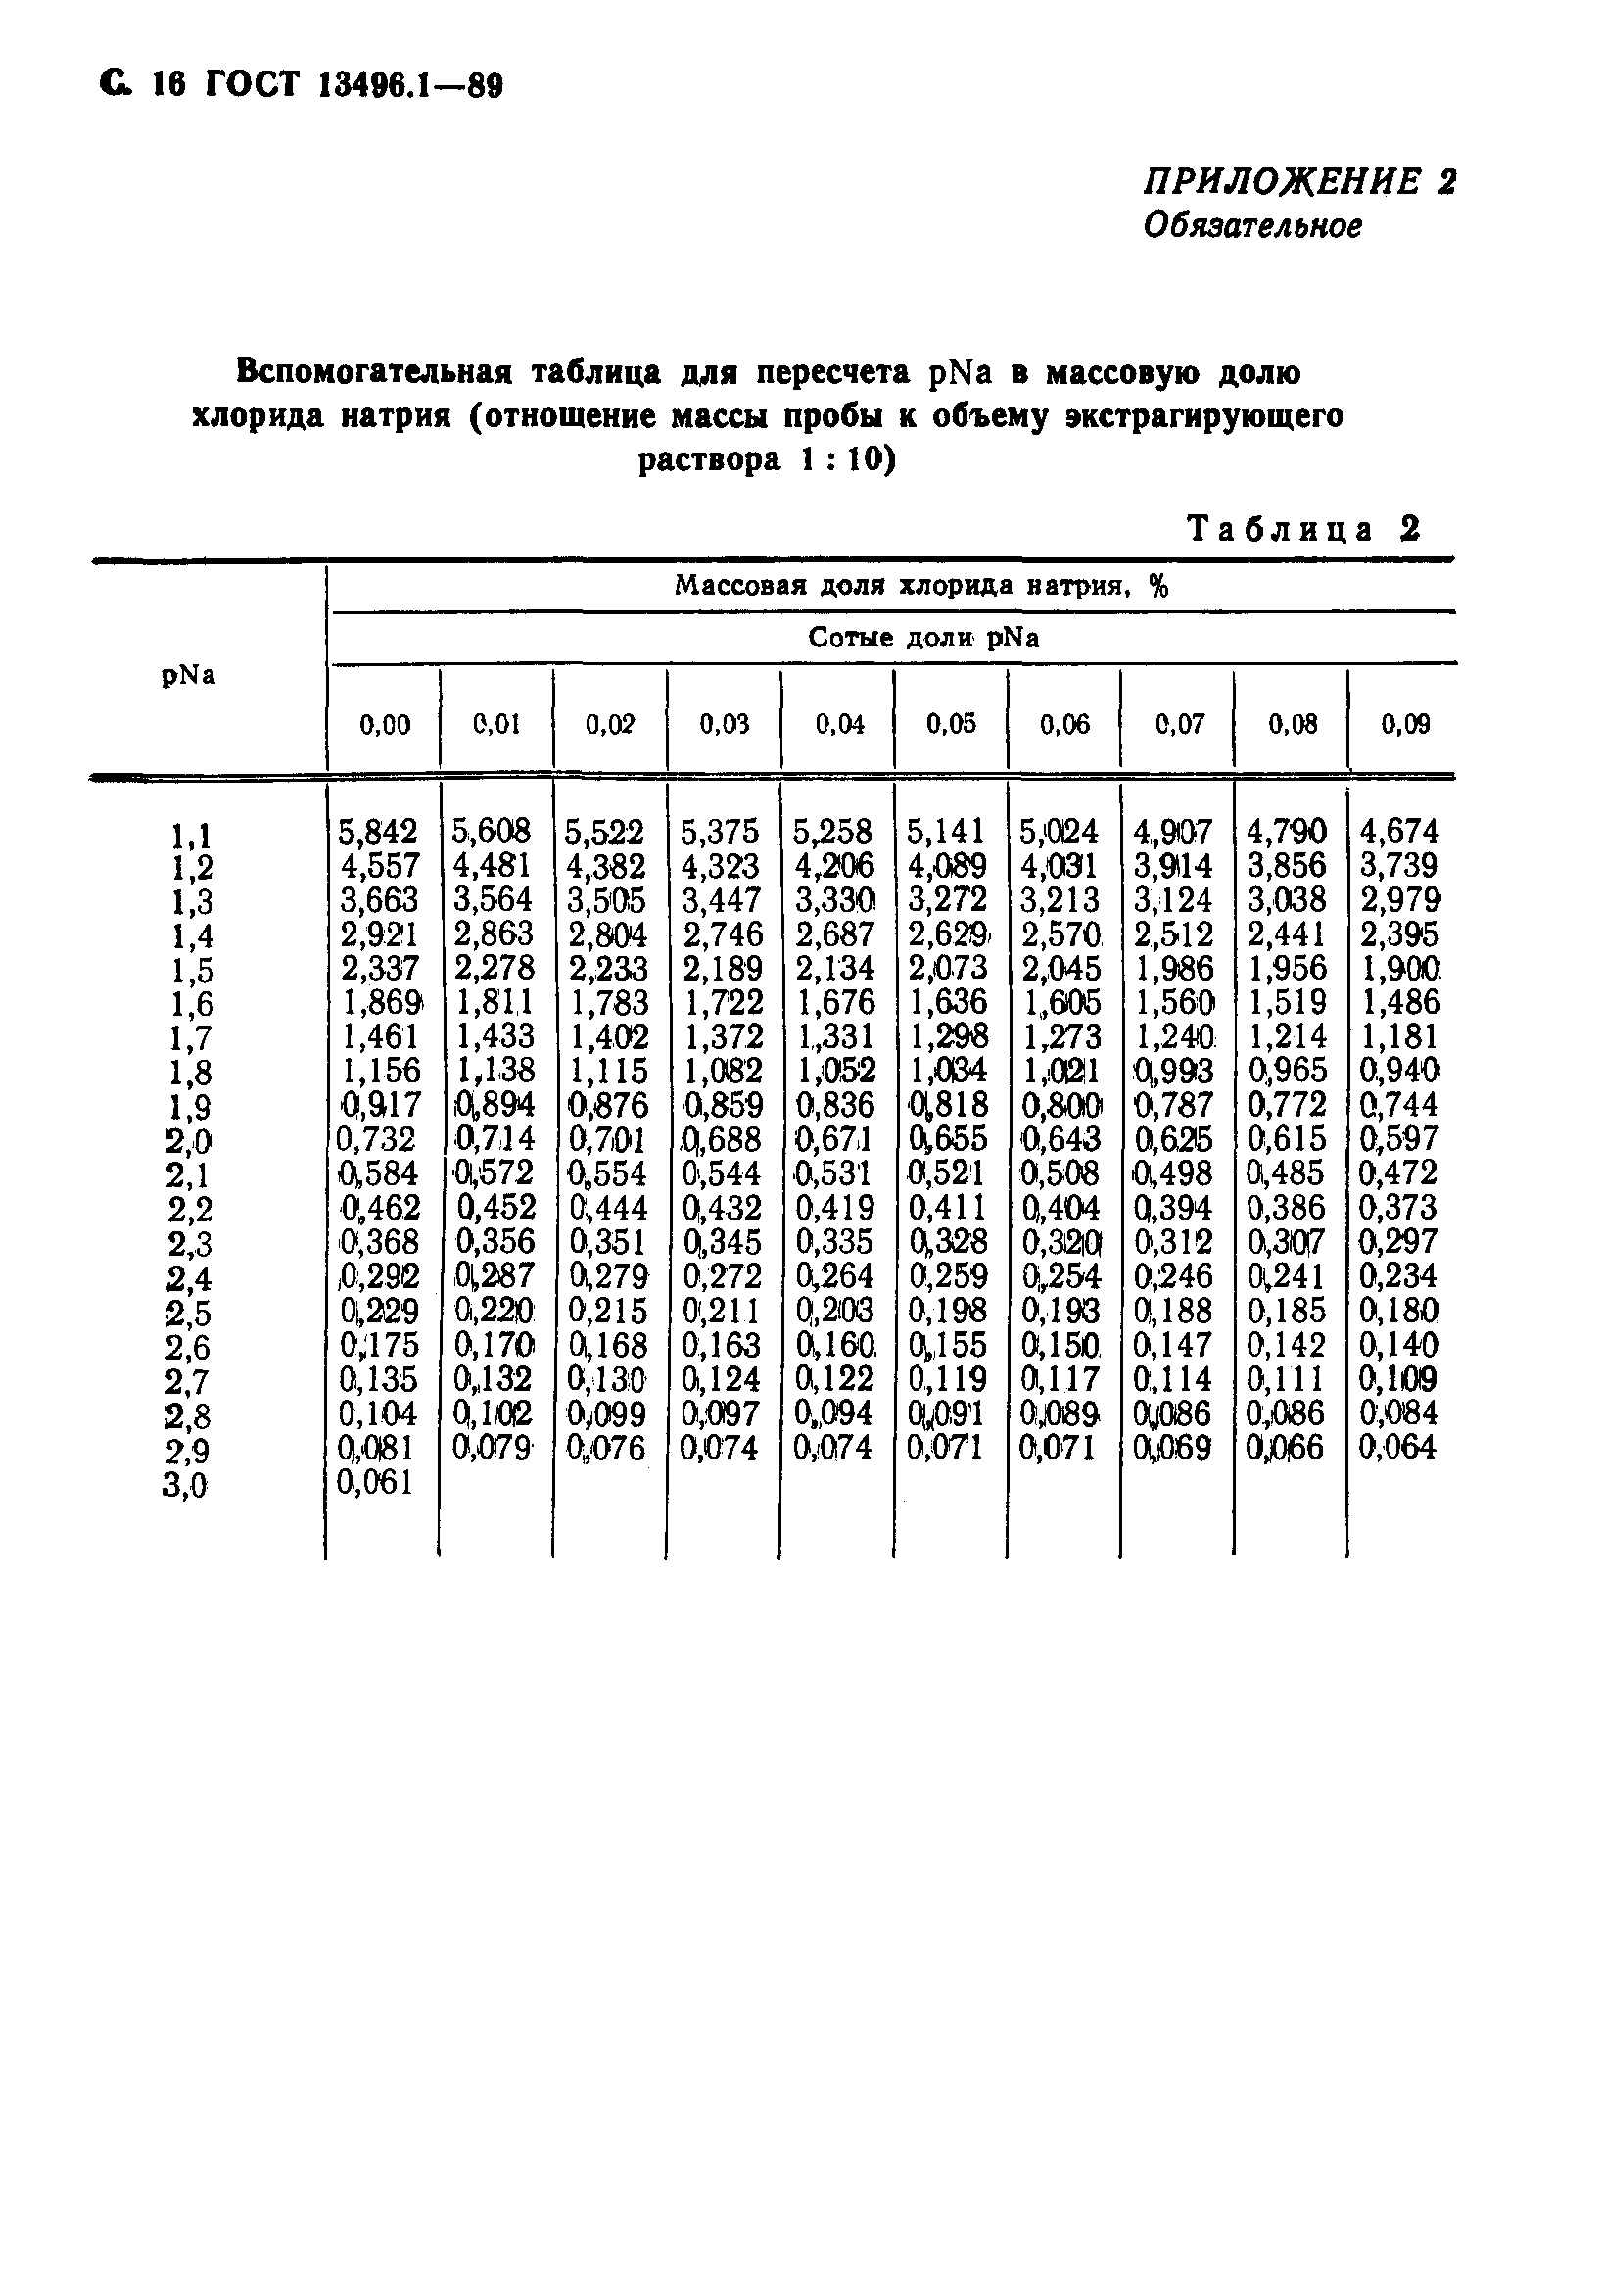 ГОСТ 13496.1-89